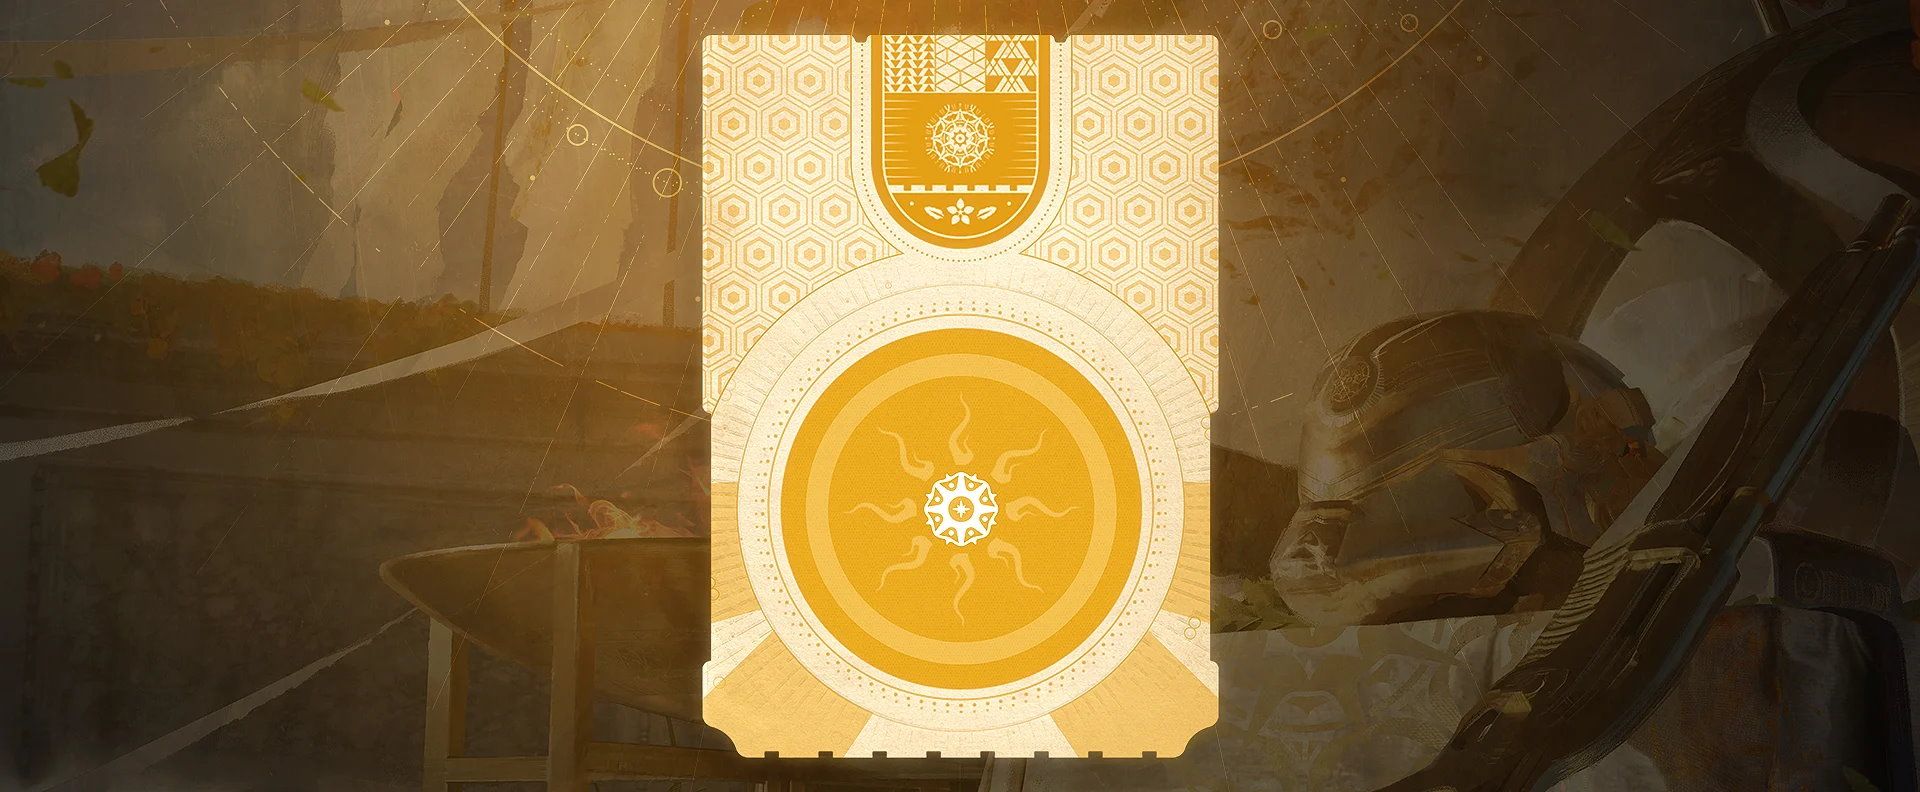 Solstice Event Card Destiny 2 - via Bungie